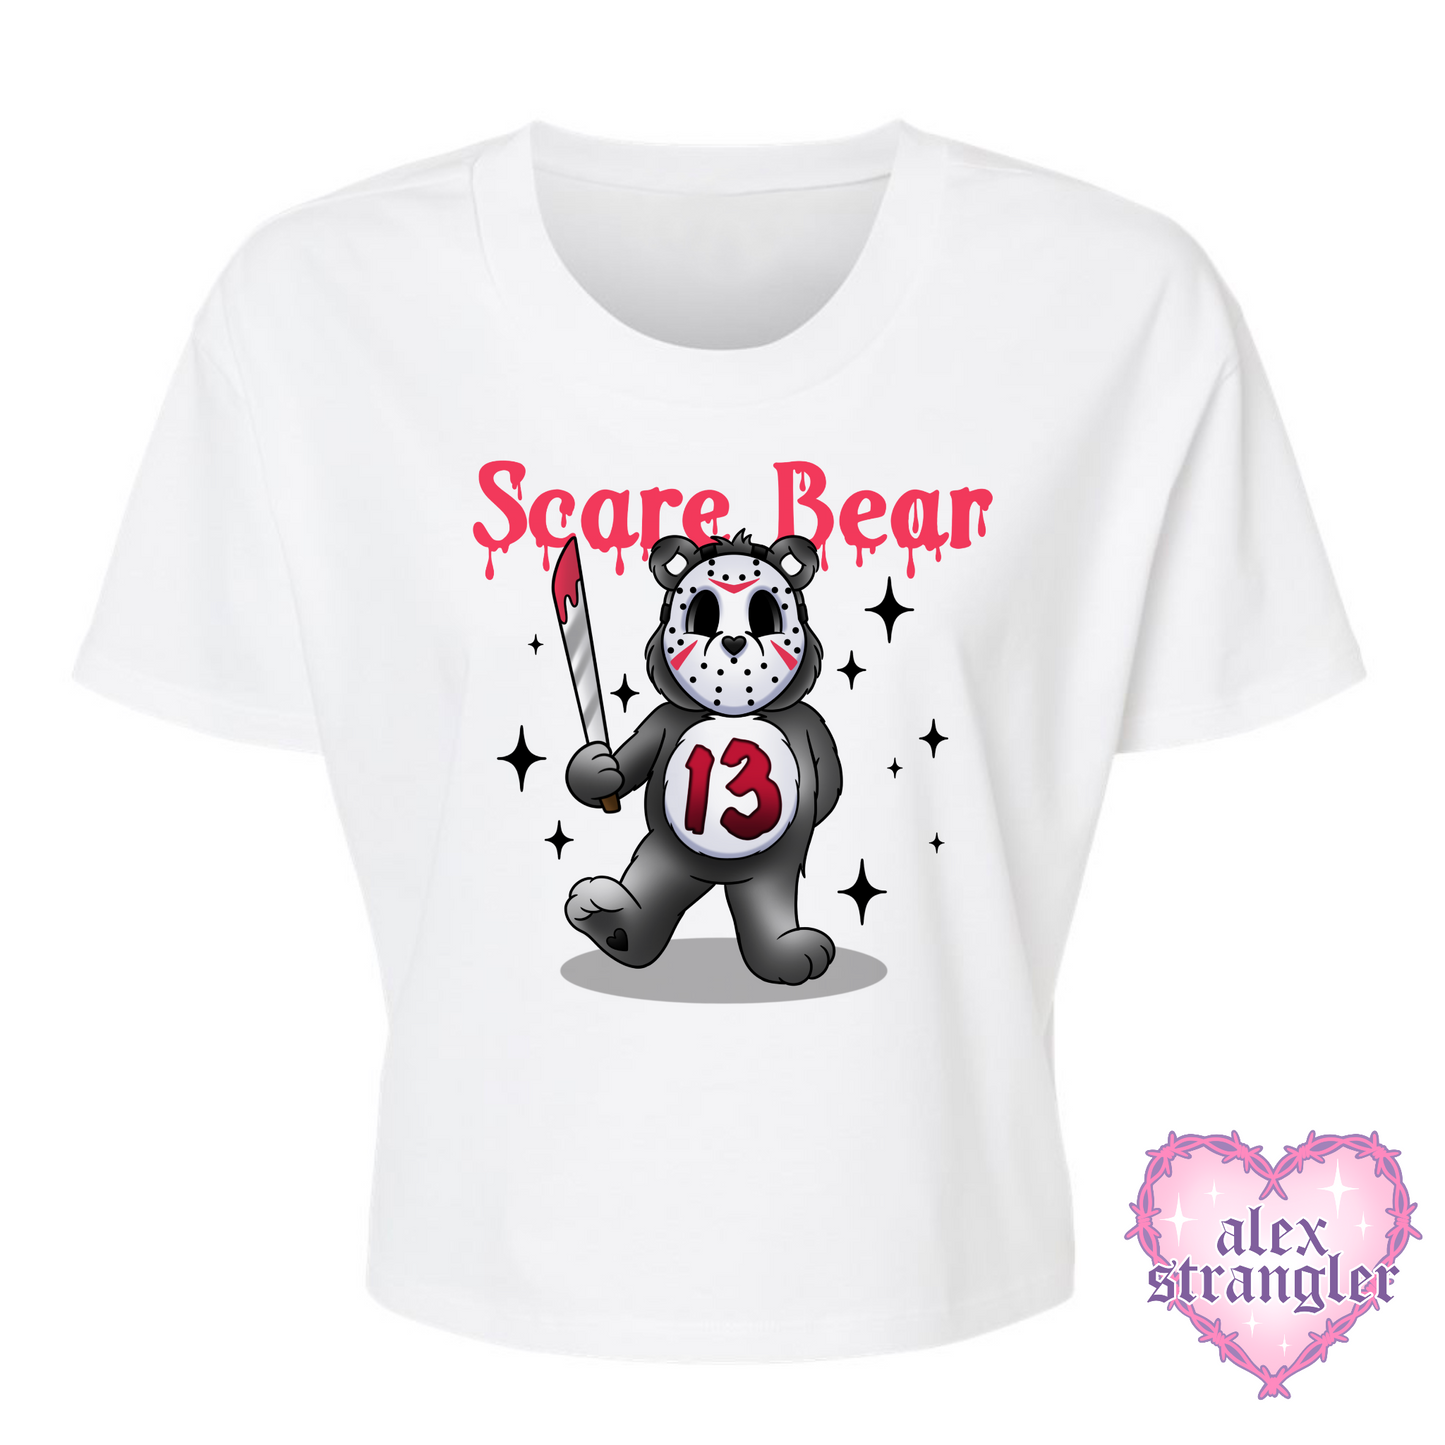 Scare Bear - Alternative Women's Crop Tee *NEW STYLE*